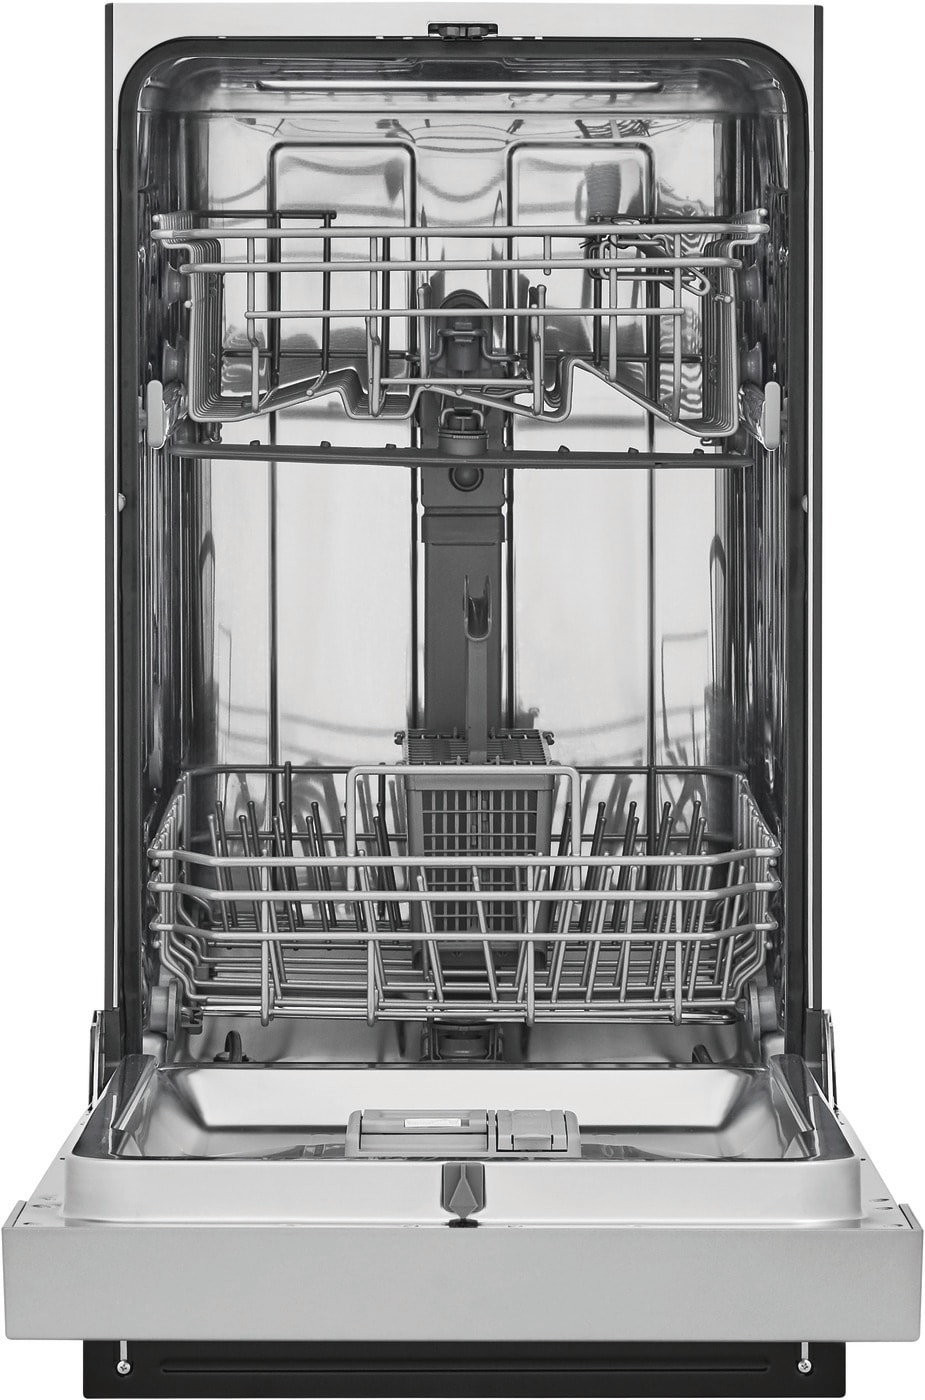 Frigidaire&nbsp;18" Stainless Steel Tub Dishwasher - image 2 of 9